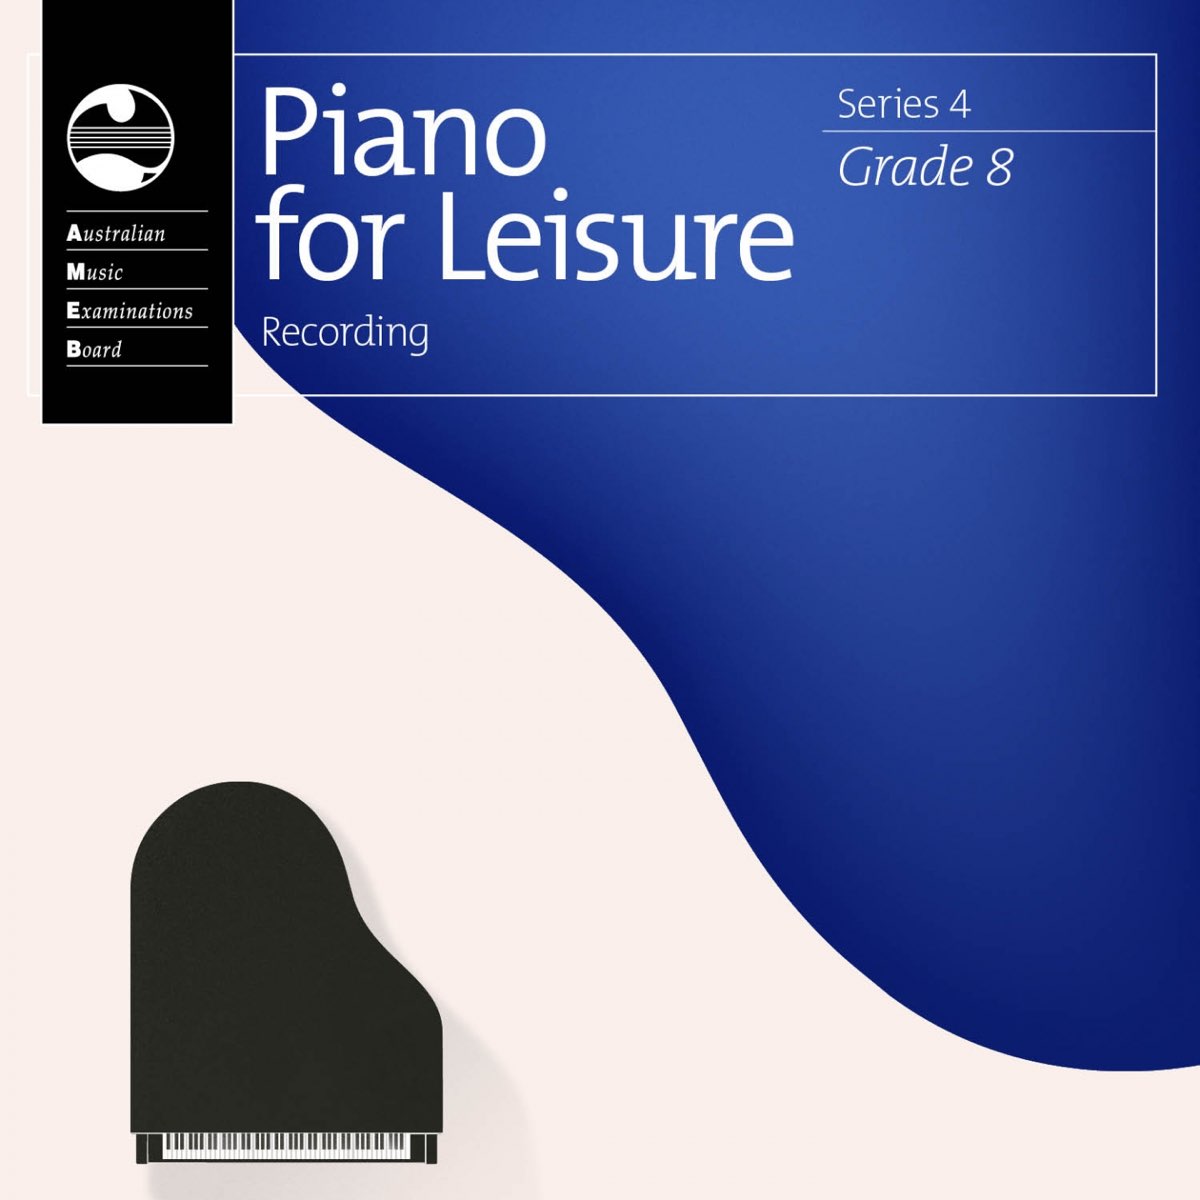 AMEB Piano for Leisure Series 4 Grade 8 - Album by Ian Munro & Caroline  Almonte - Apple Music